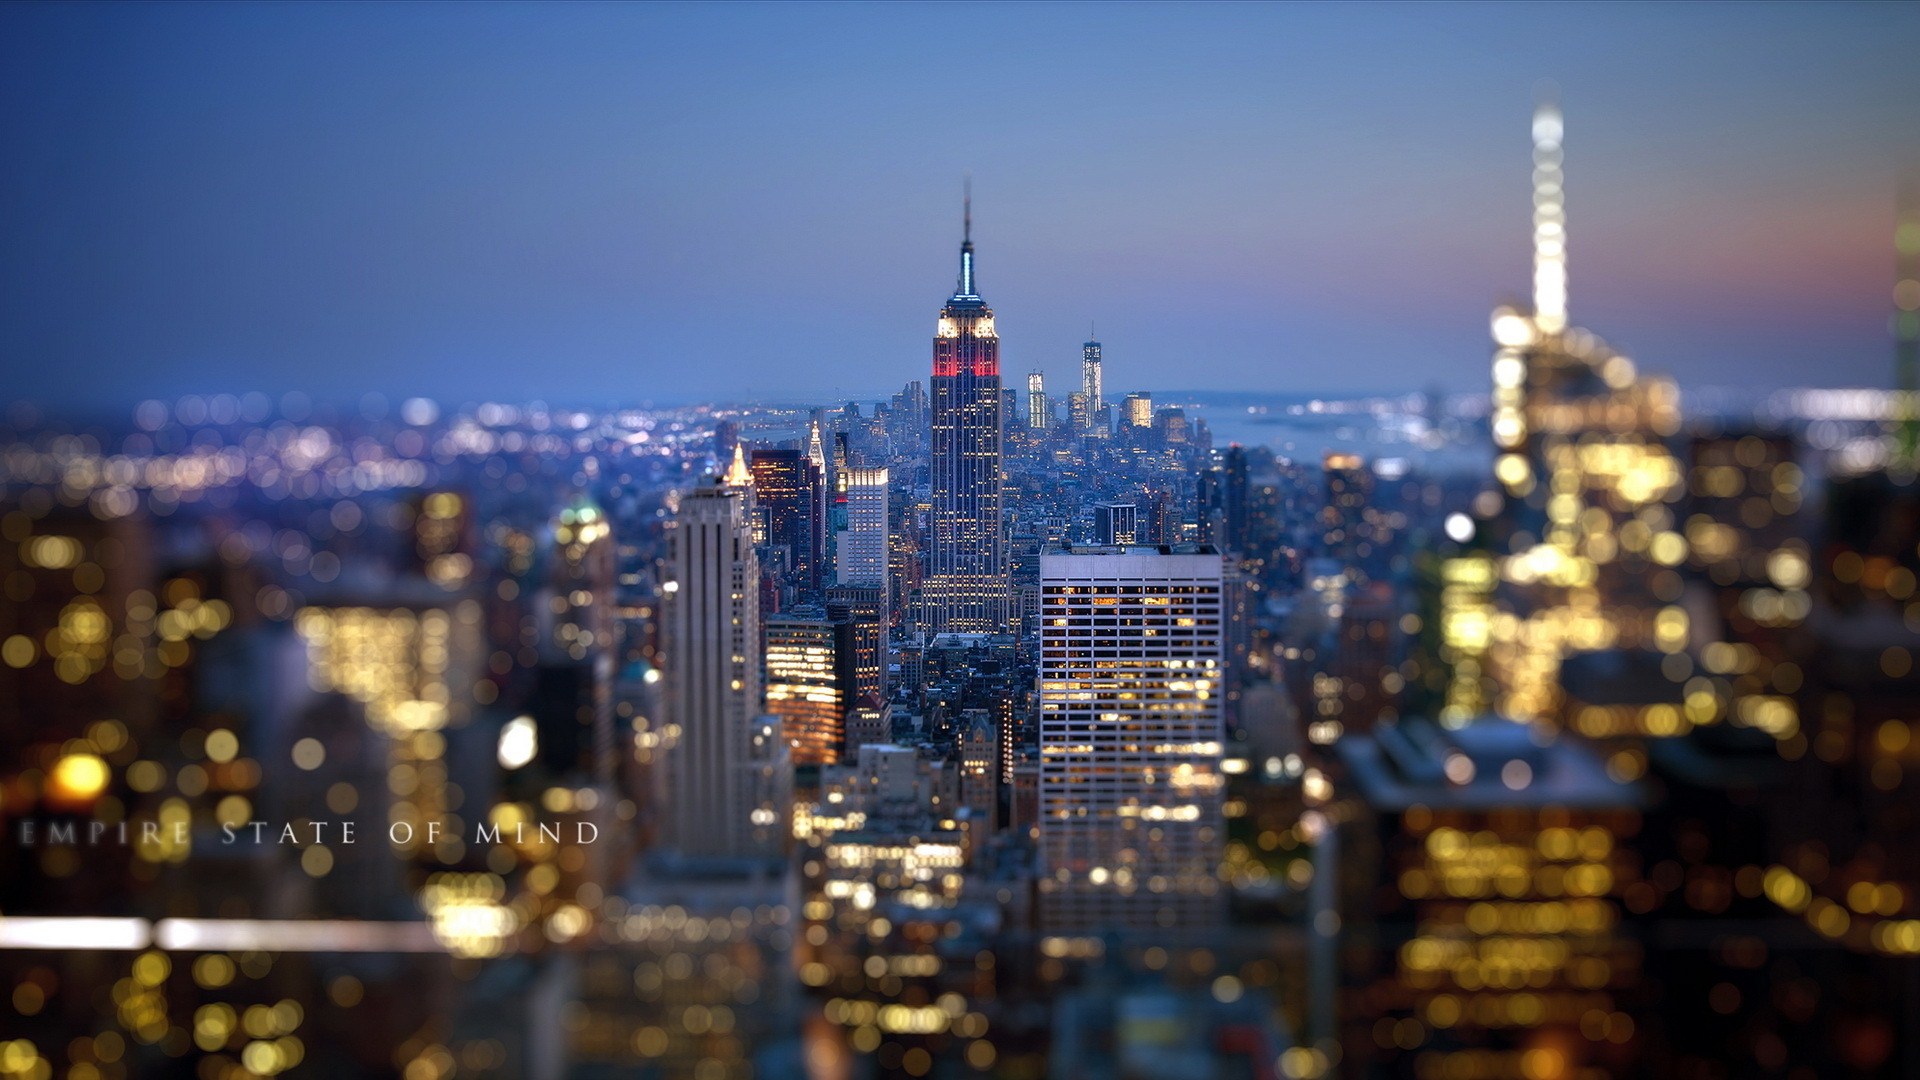 Empire State New York At Night Wallpaper HD Wallpaper